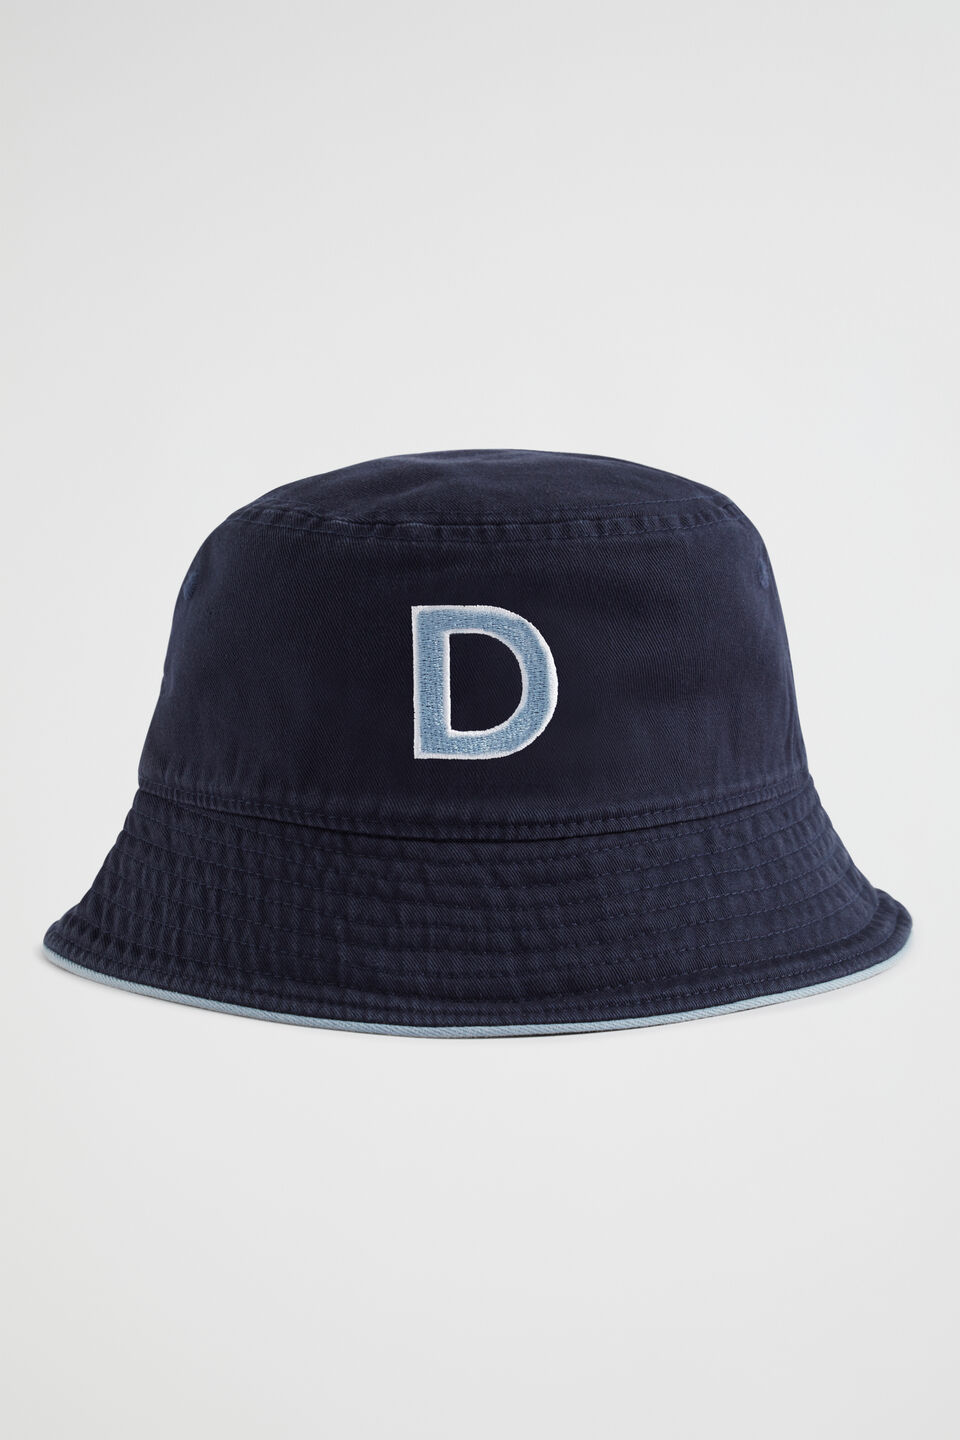 Initial Emb Bucket Hat  D